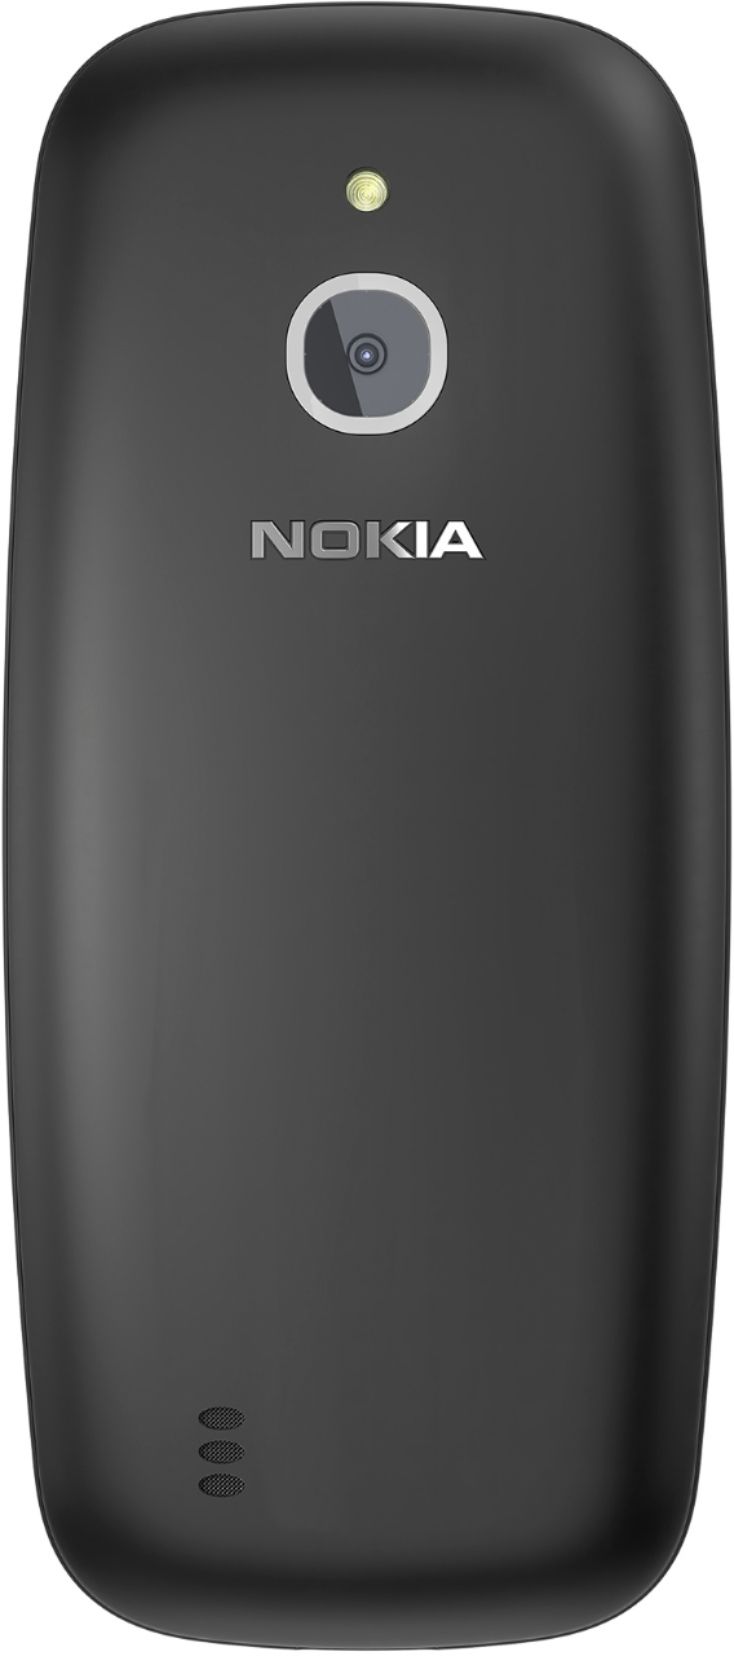 Nokia 3310 - White (Unlocked) Cellular Phone for sale online